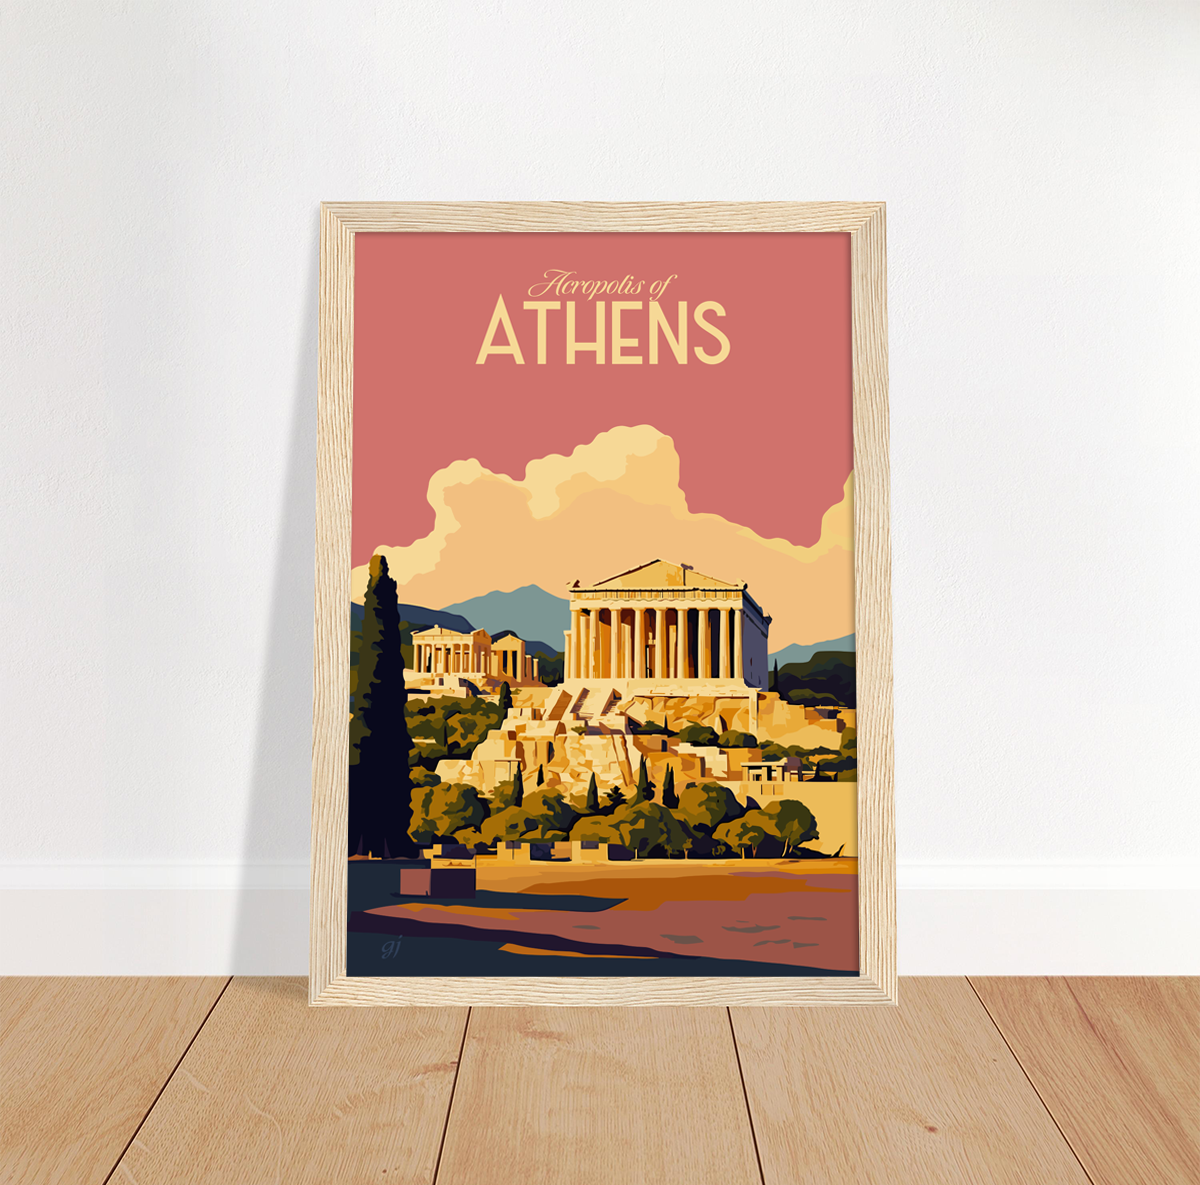 Athens poster by bon voyage design